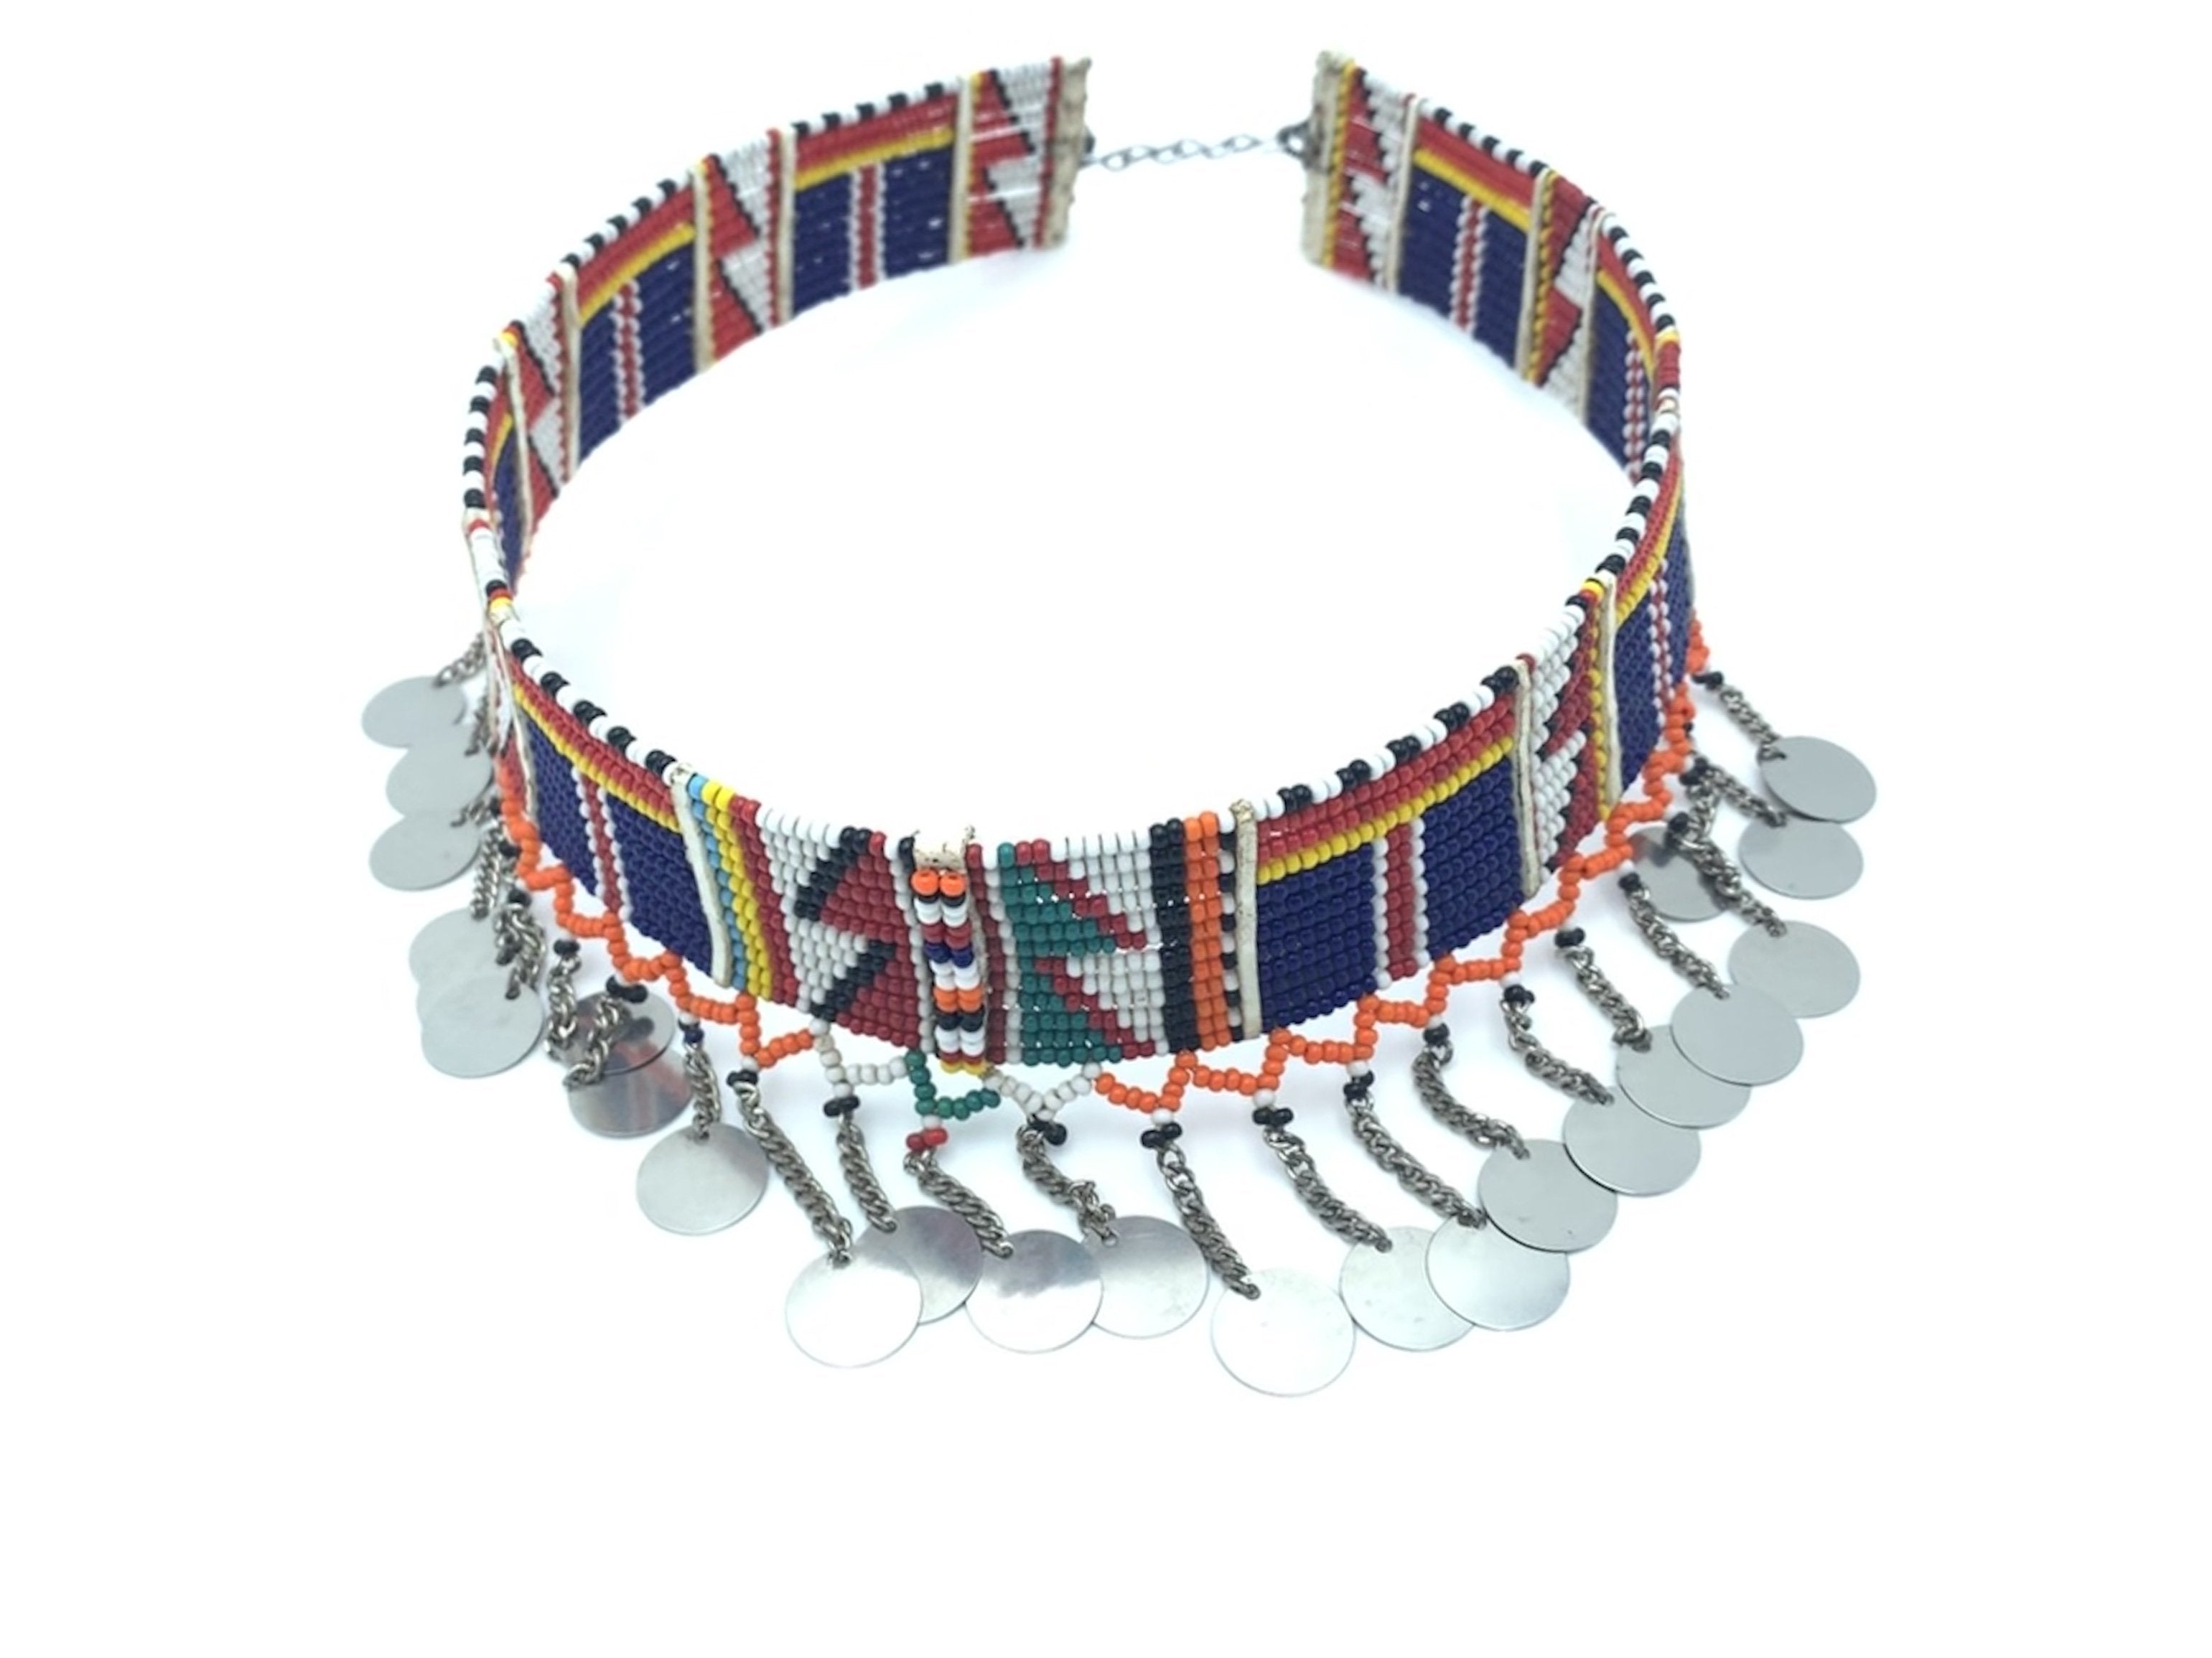 Esiteti Collar Necklace Necklaces RoHo Goods 